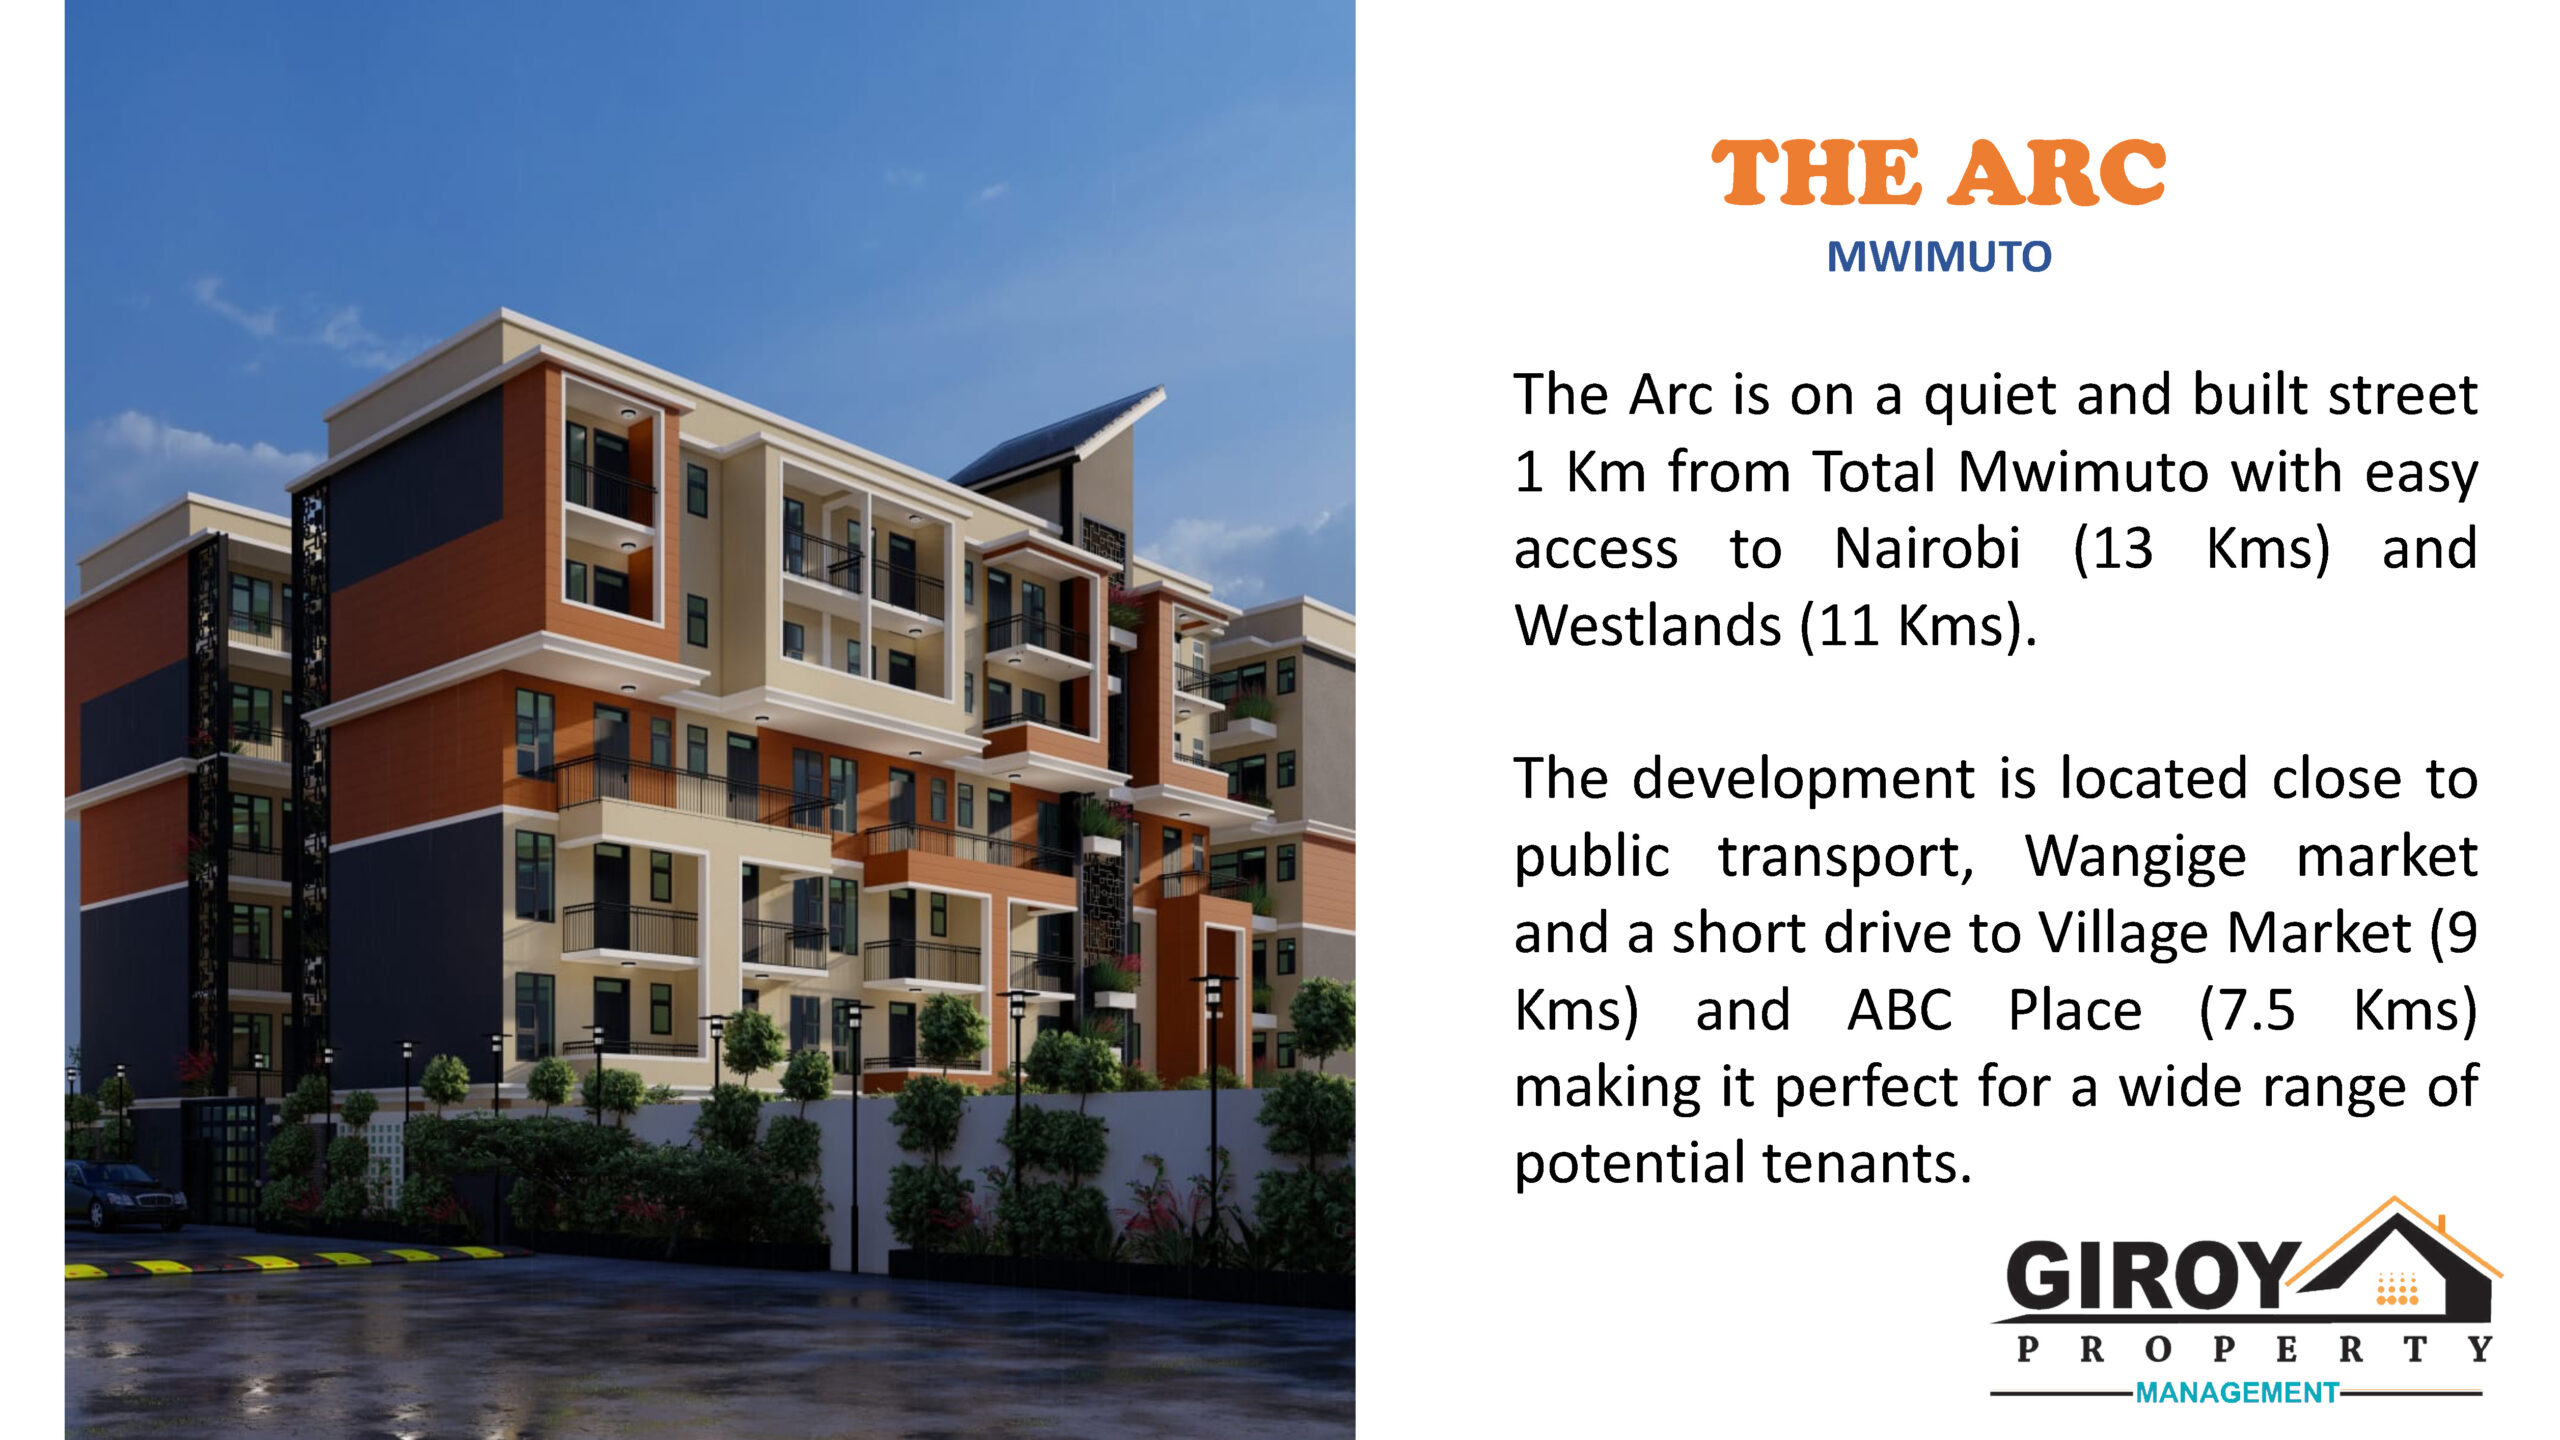 The Arc - Mwimto - One Bedroom and Studio Apartment Building Located near Total Mwimuto, under development3